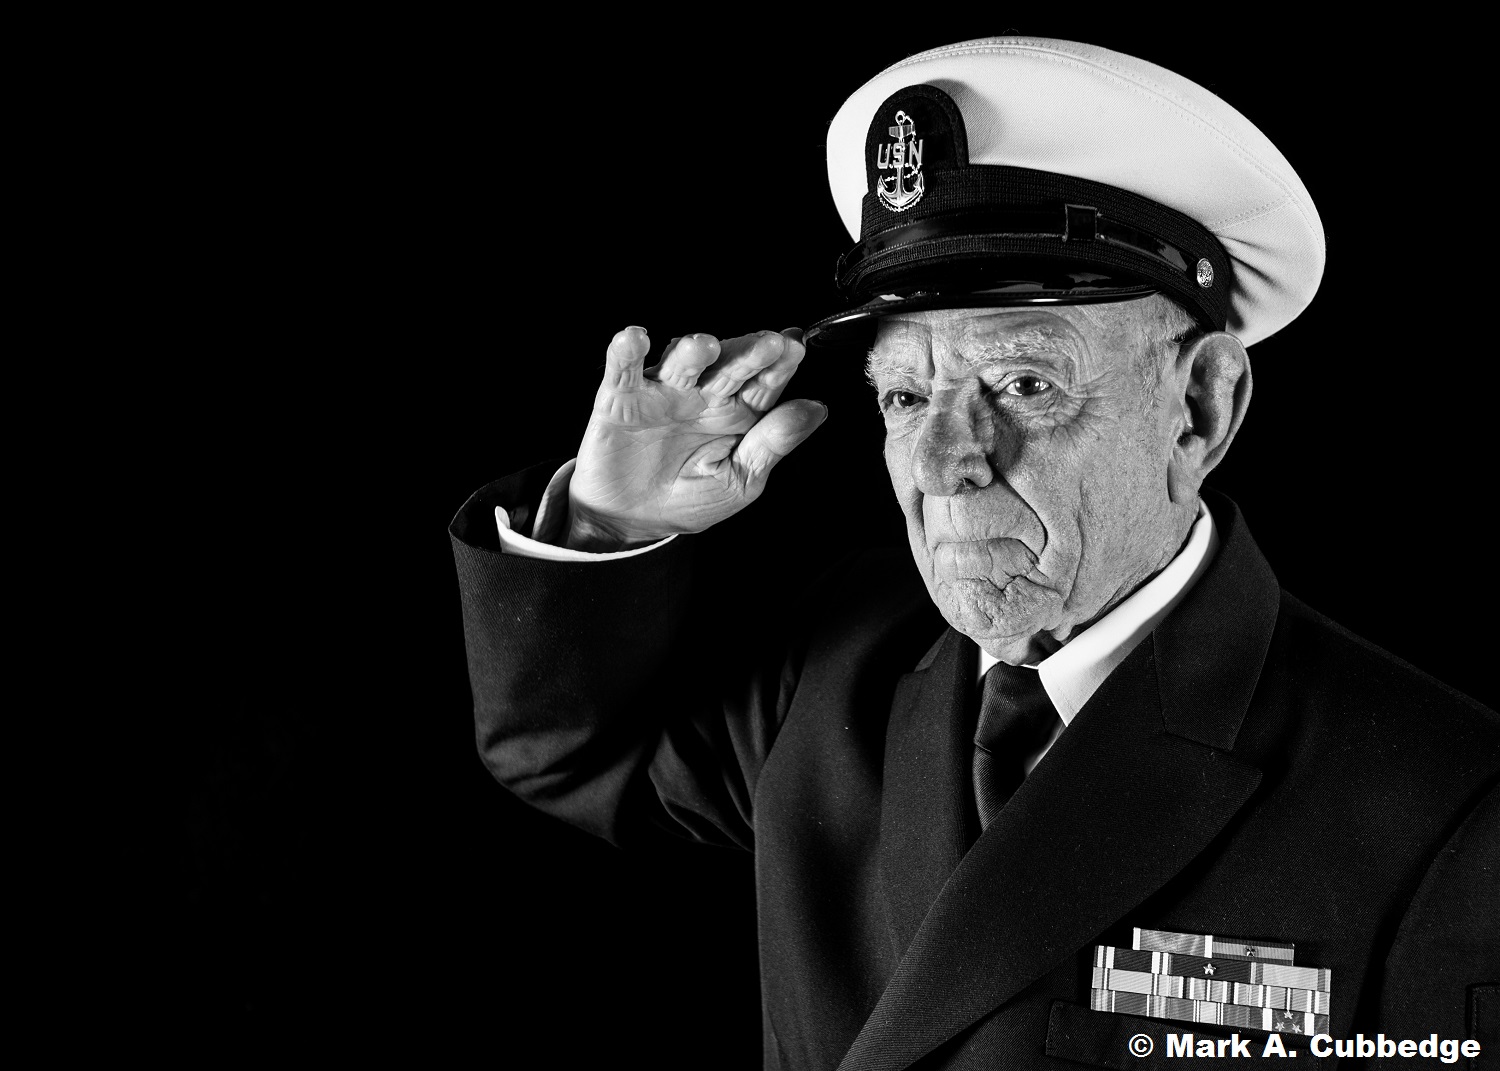  Bill Ingram, USS Houston survivor and former Death Railway POW 